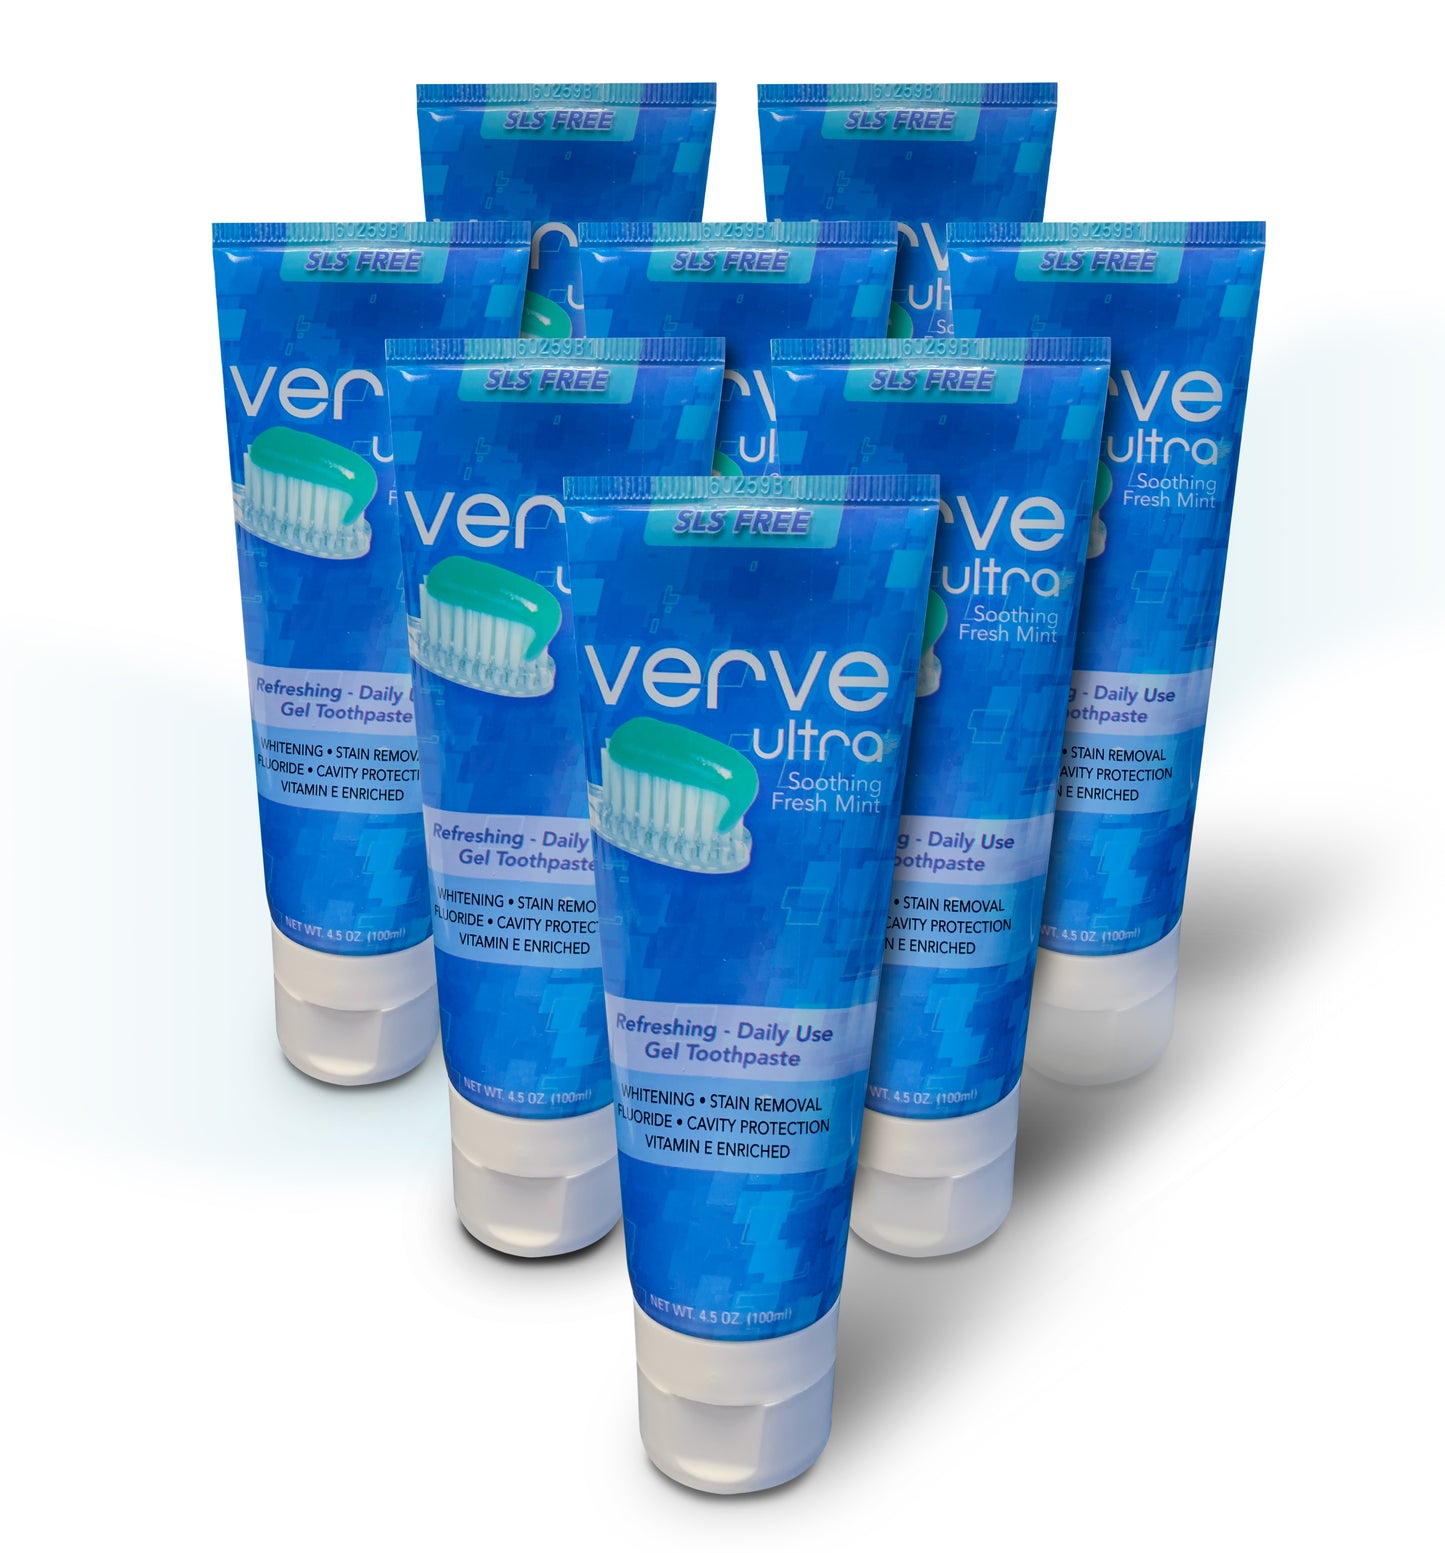 Verve Ultra Toothpaste (4.5 oz) - Eight Tubes